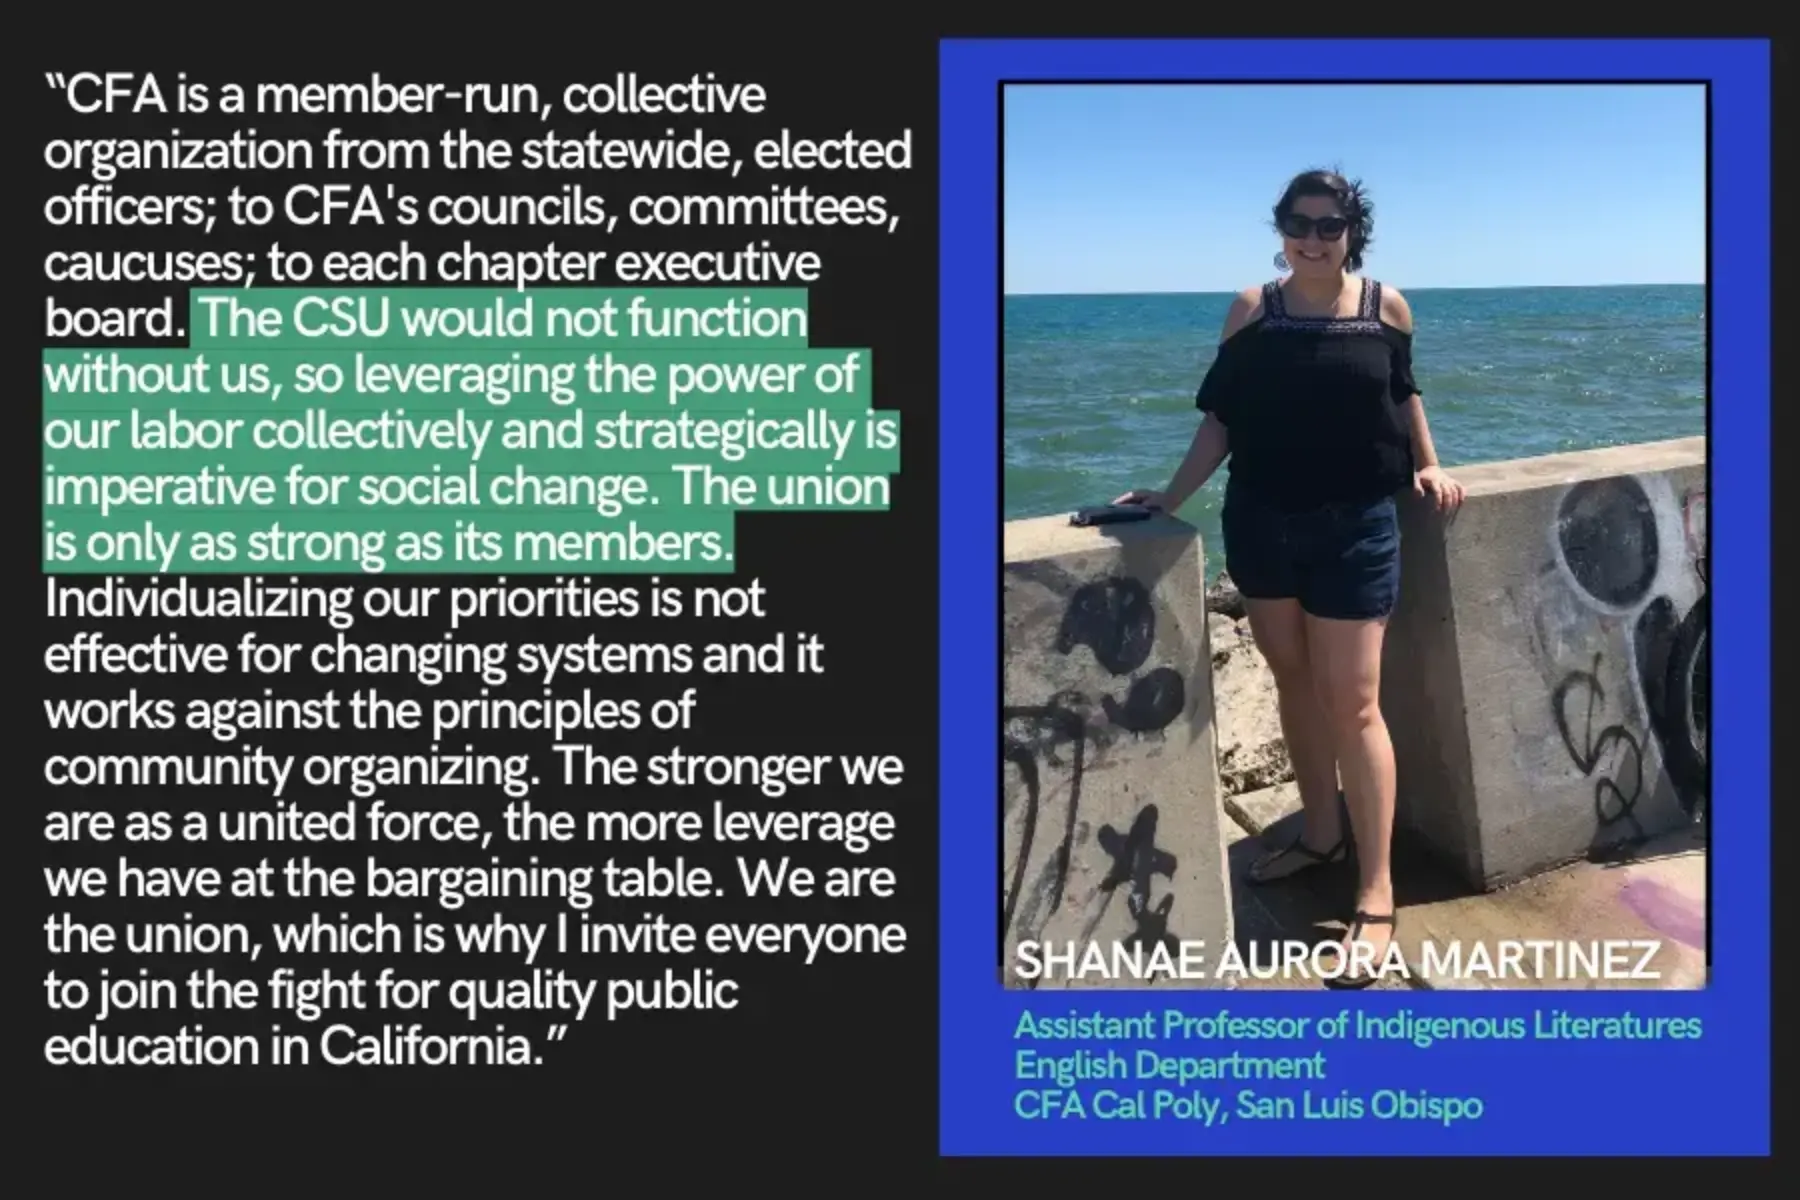 Shanae Aurora Martinez talks about why she joined CFA.